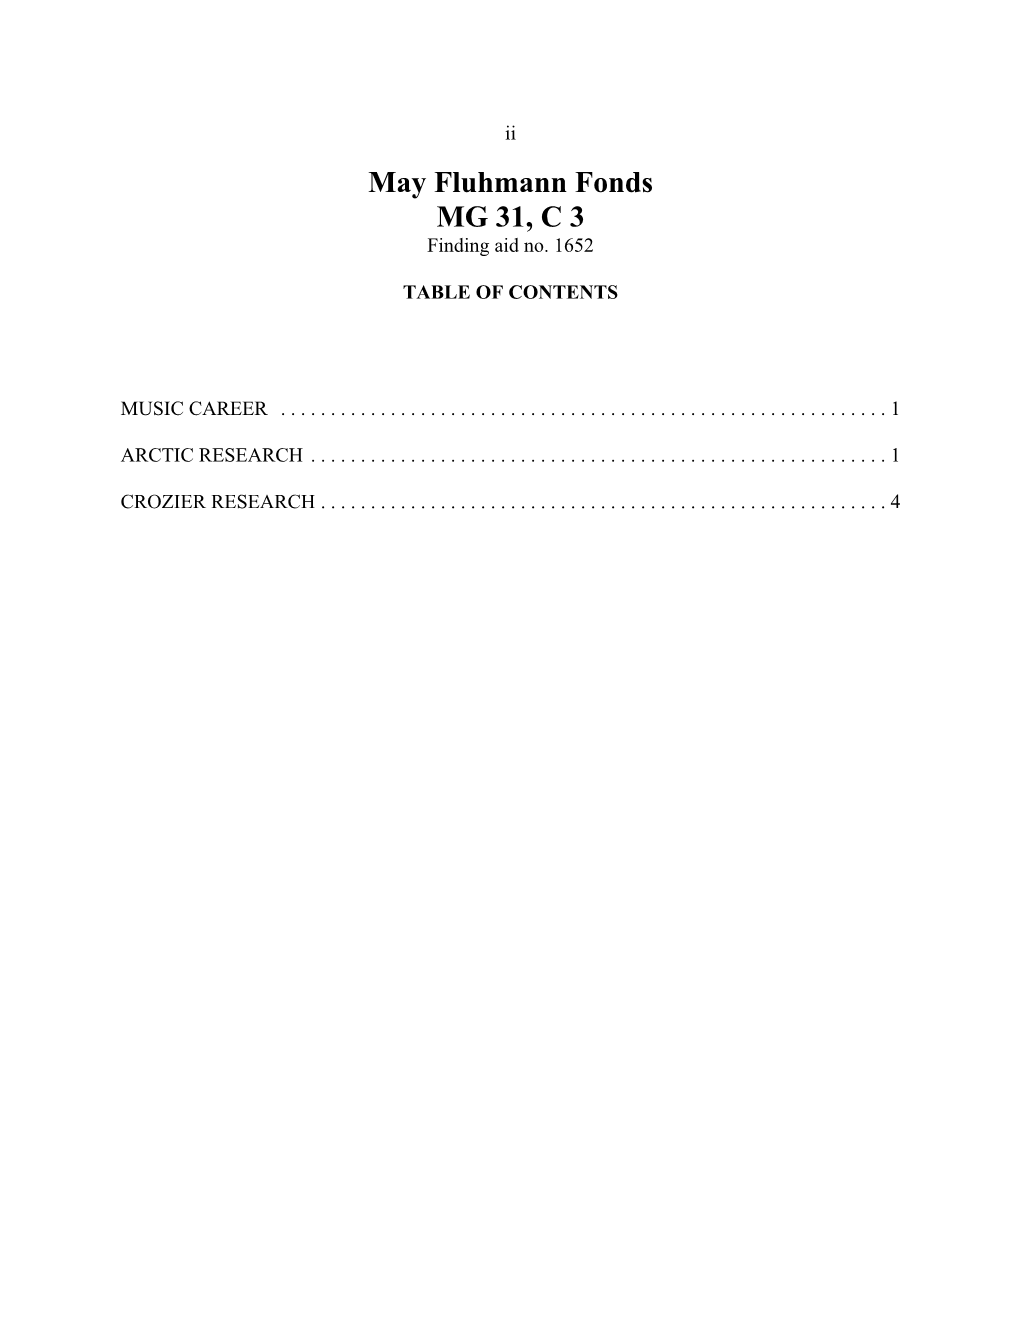 May Fluhmann Fonds MG 31, C 3 Finding Aid No